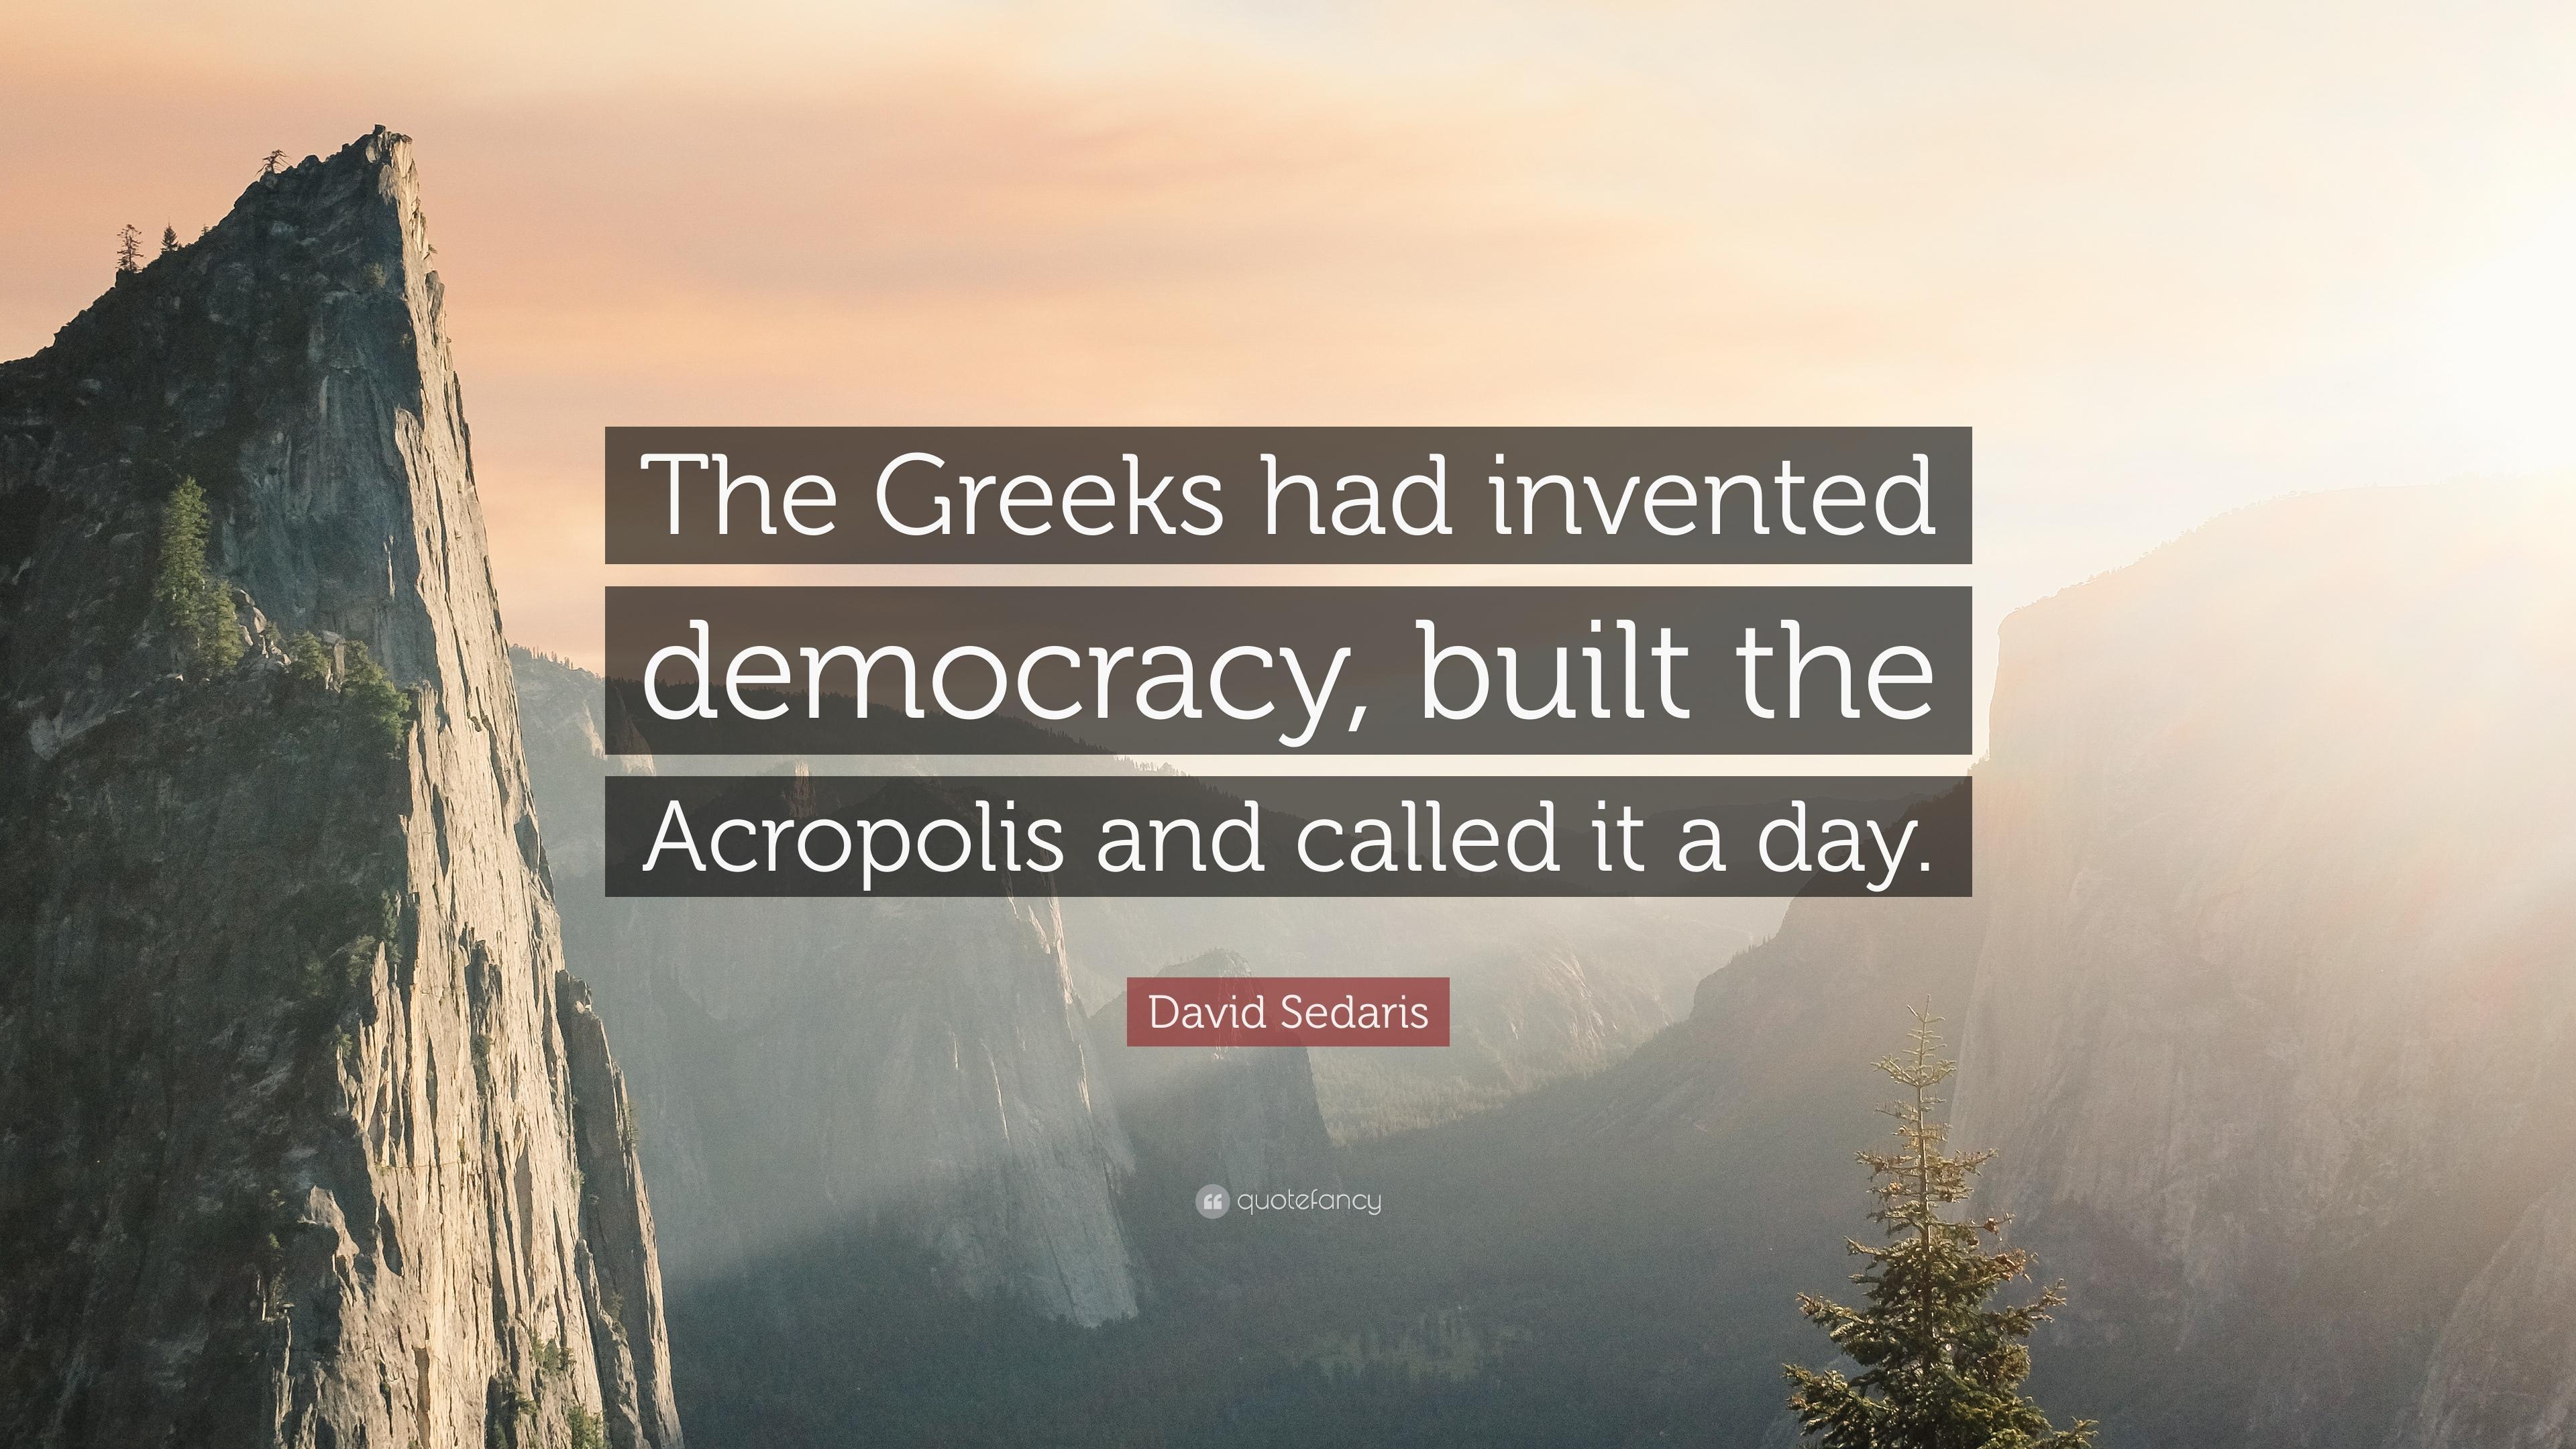 David Sedaris Quote: “The Greeks had invented democracy, built